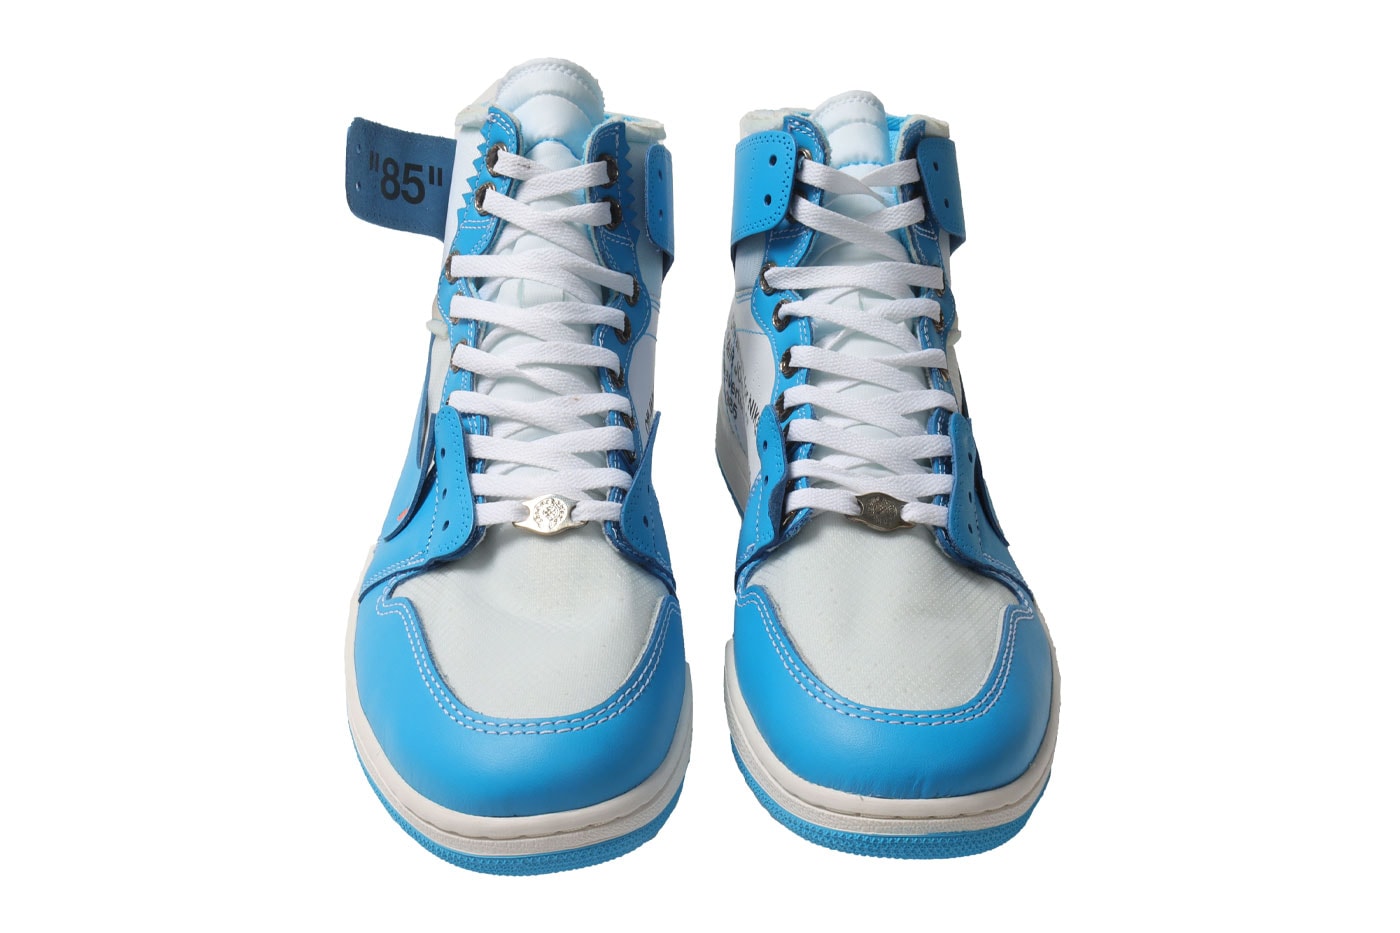 Nike x OFF-WHITE Air Jordan 1 Retro High OG UNC - Release Date